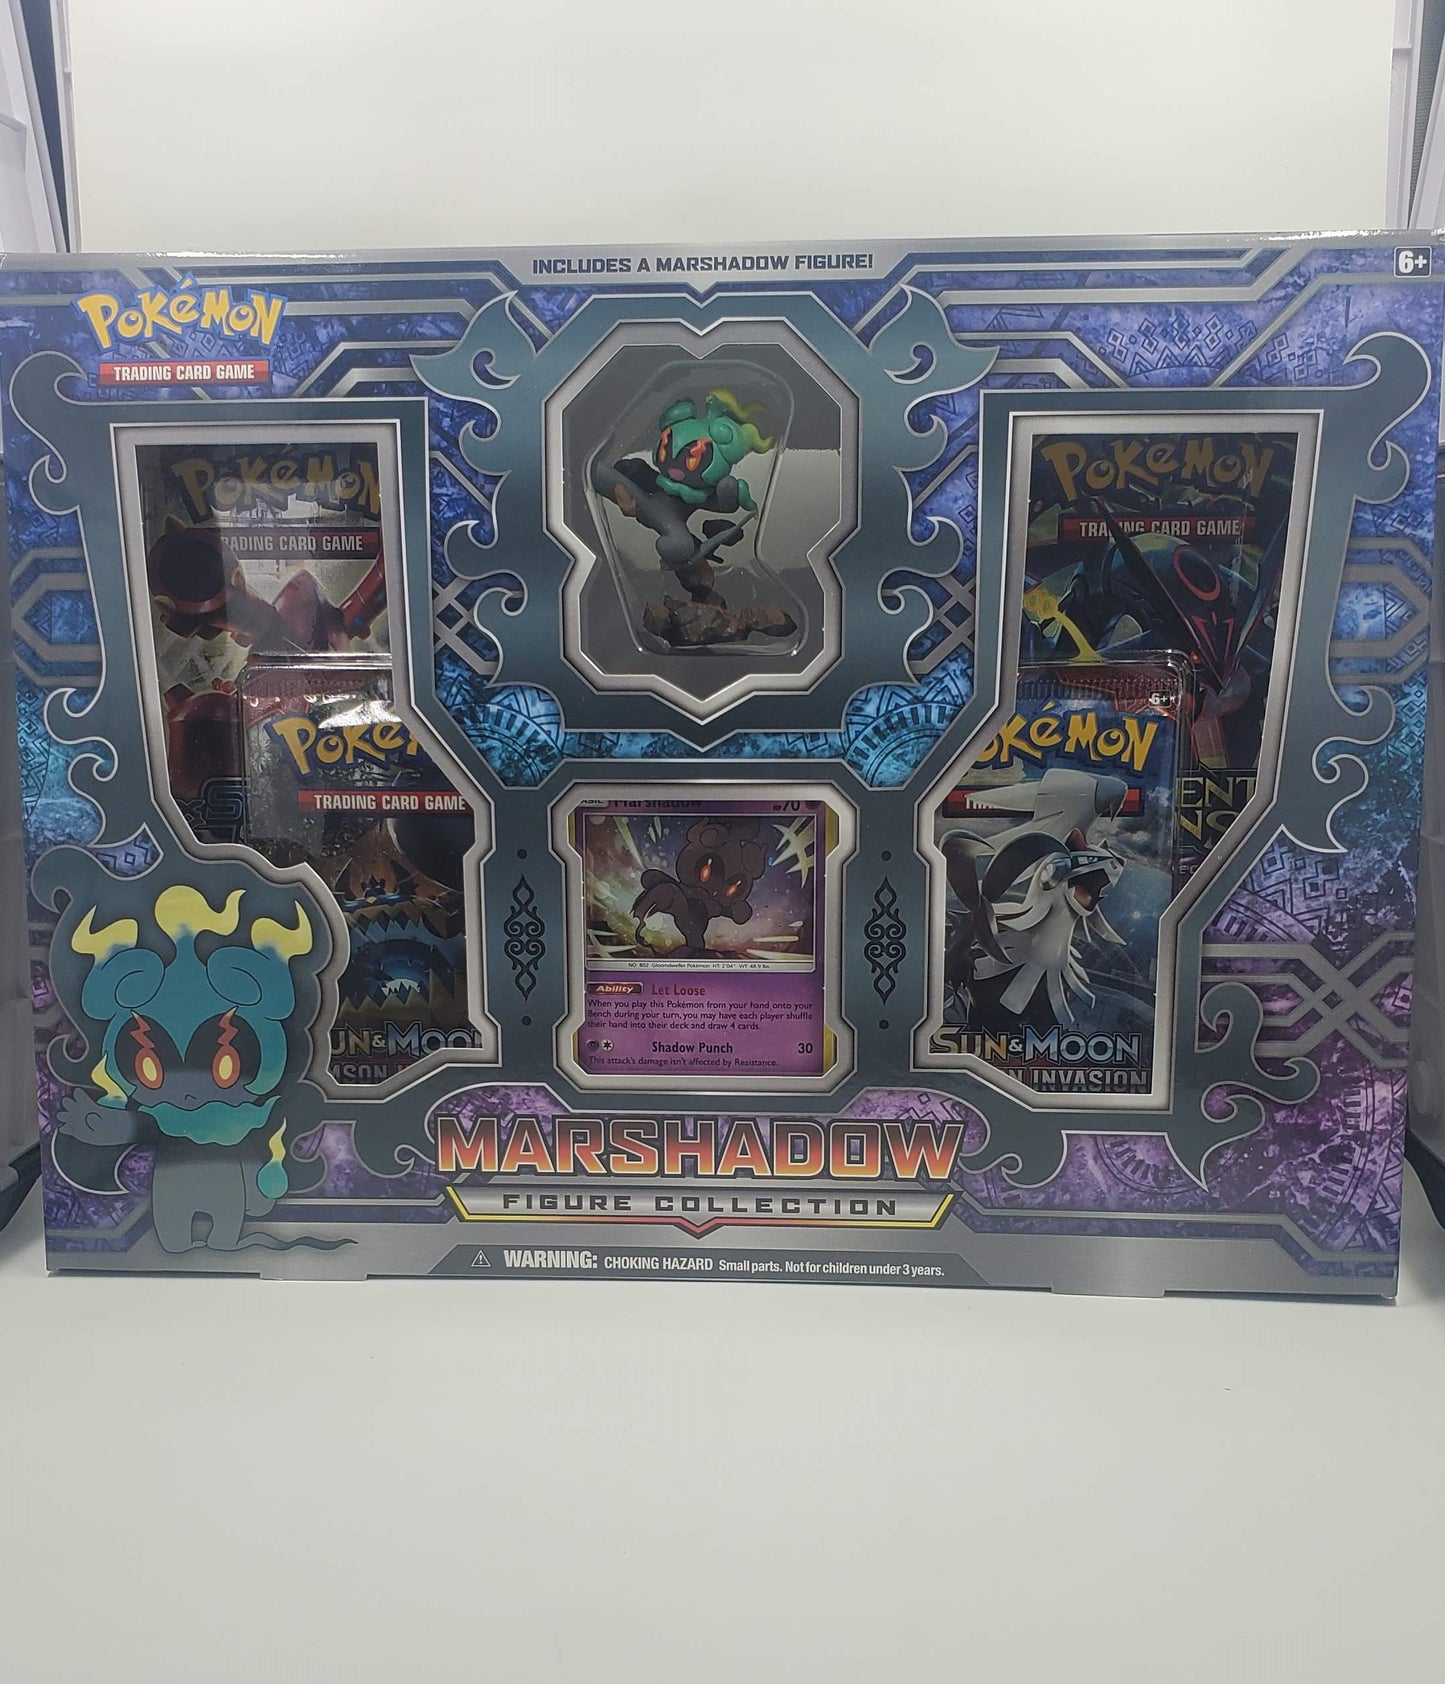 Pokemon Trading Card Game Marshadow Figure Collection Box